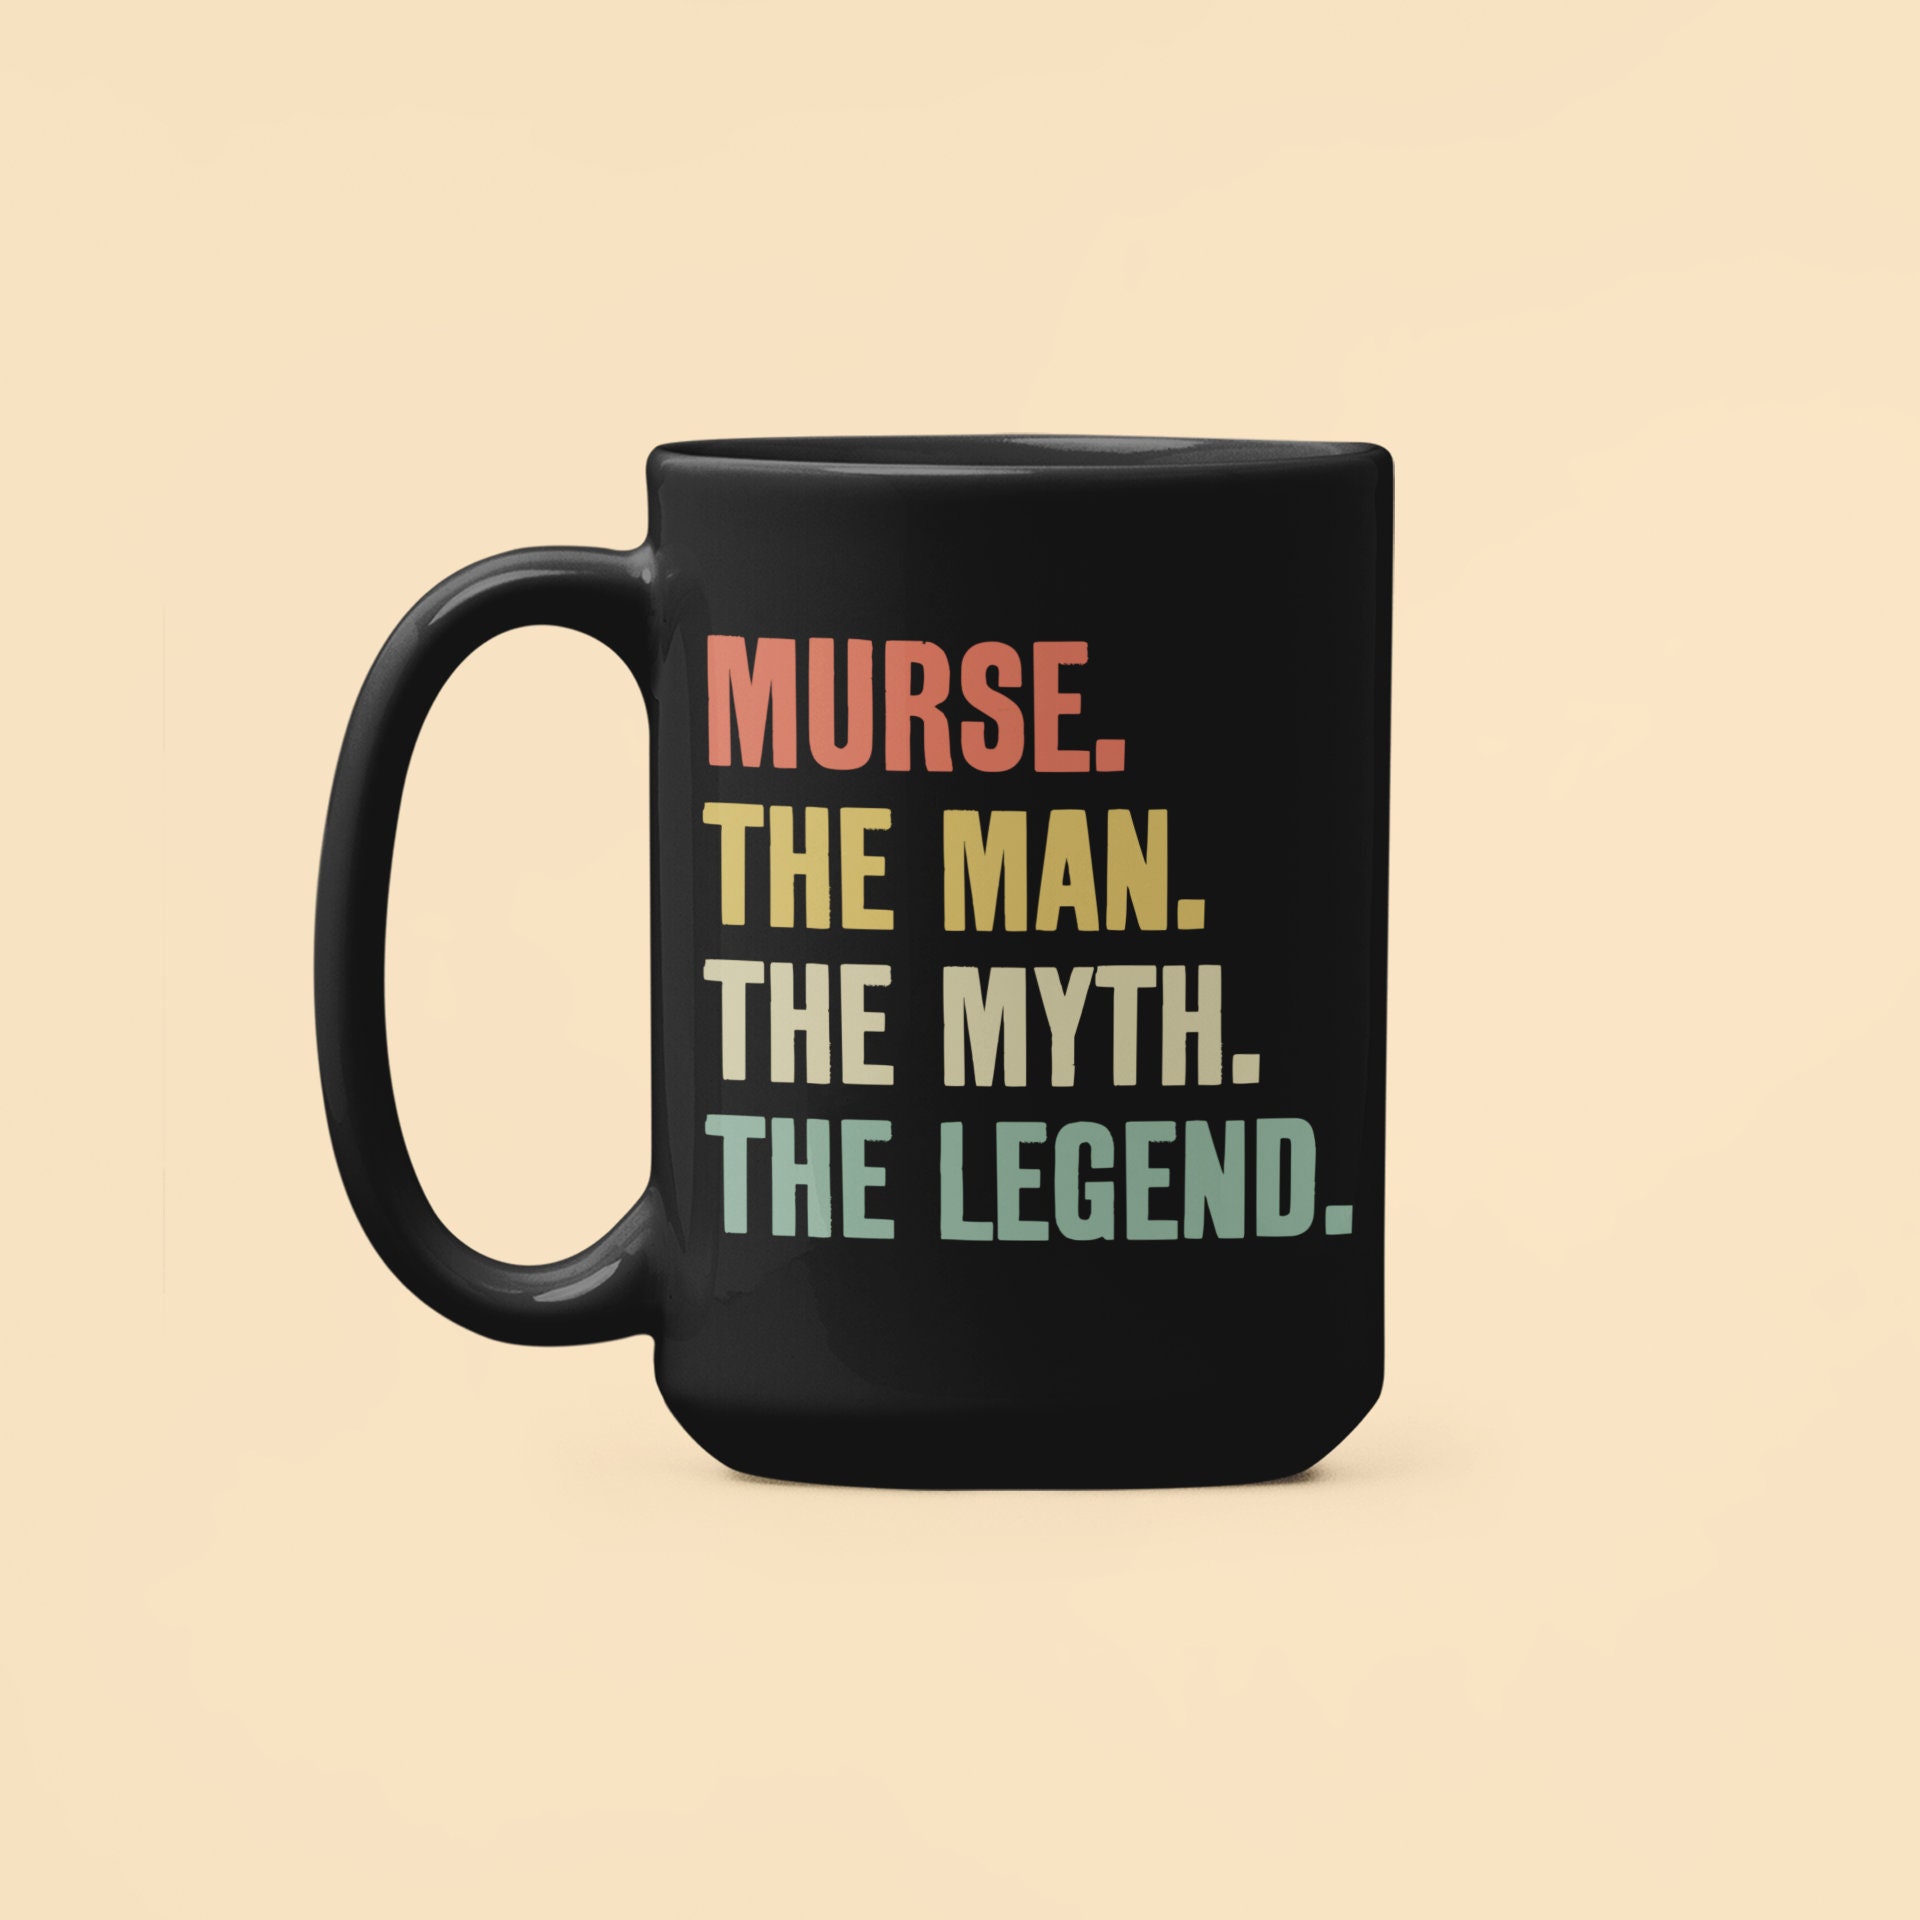 Male Nurse Gifts, Murse Mug, The Man the Myth the Legend, Man Nursing Mug